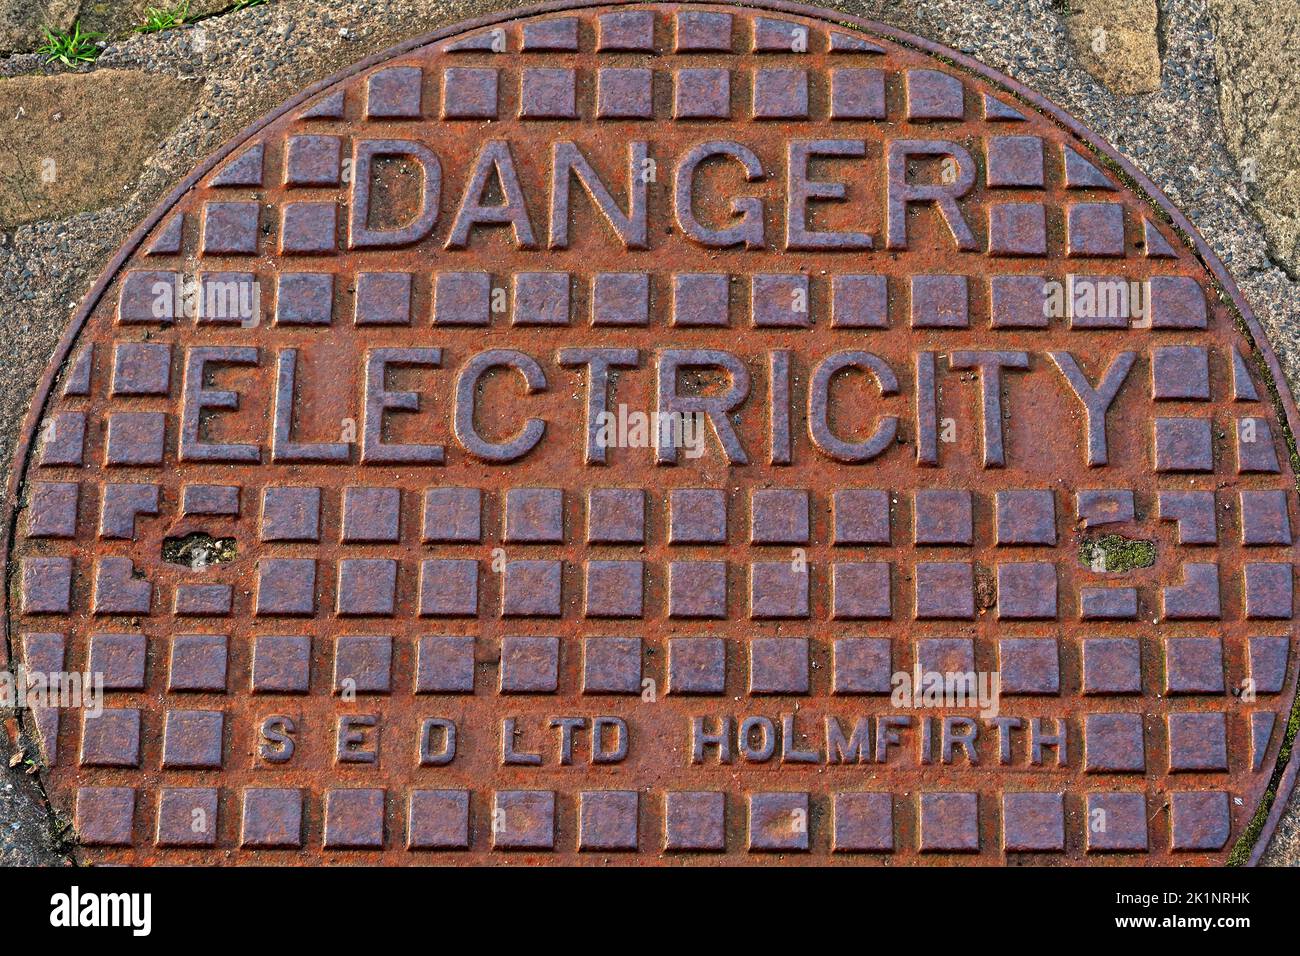 Iron Grid, Danger Electricity, SED ltd, Holmfirth, Yorkshire, West Yorkshire, England, Großbritannien Stockfoto